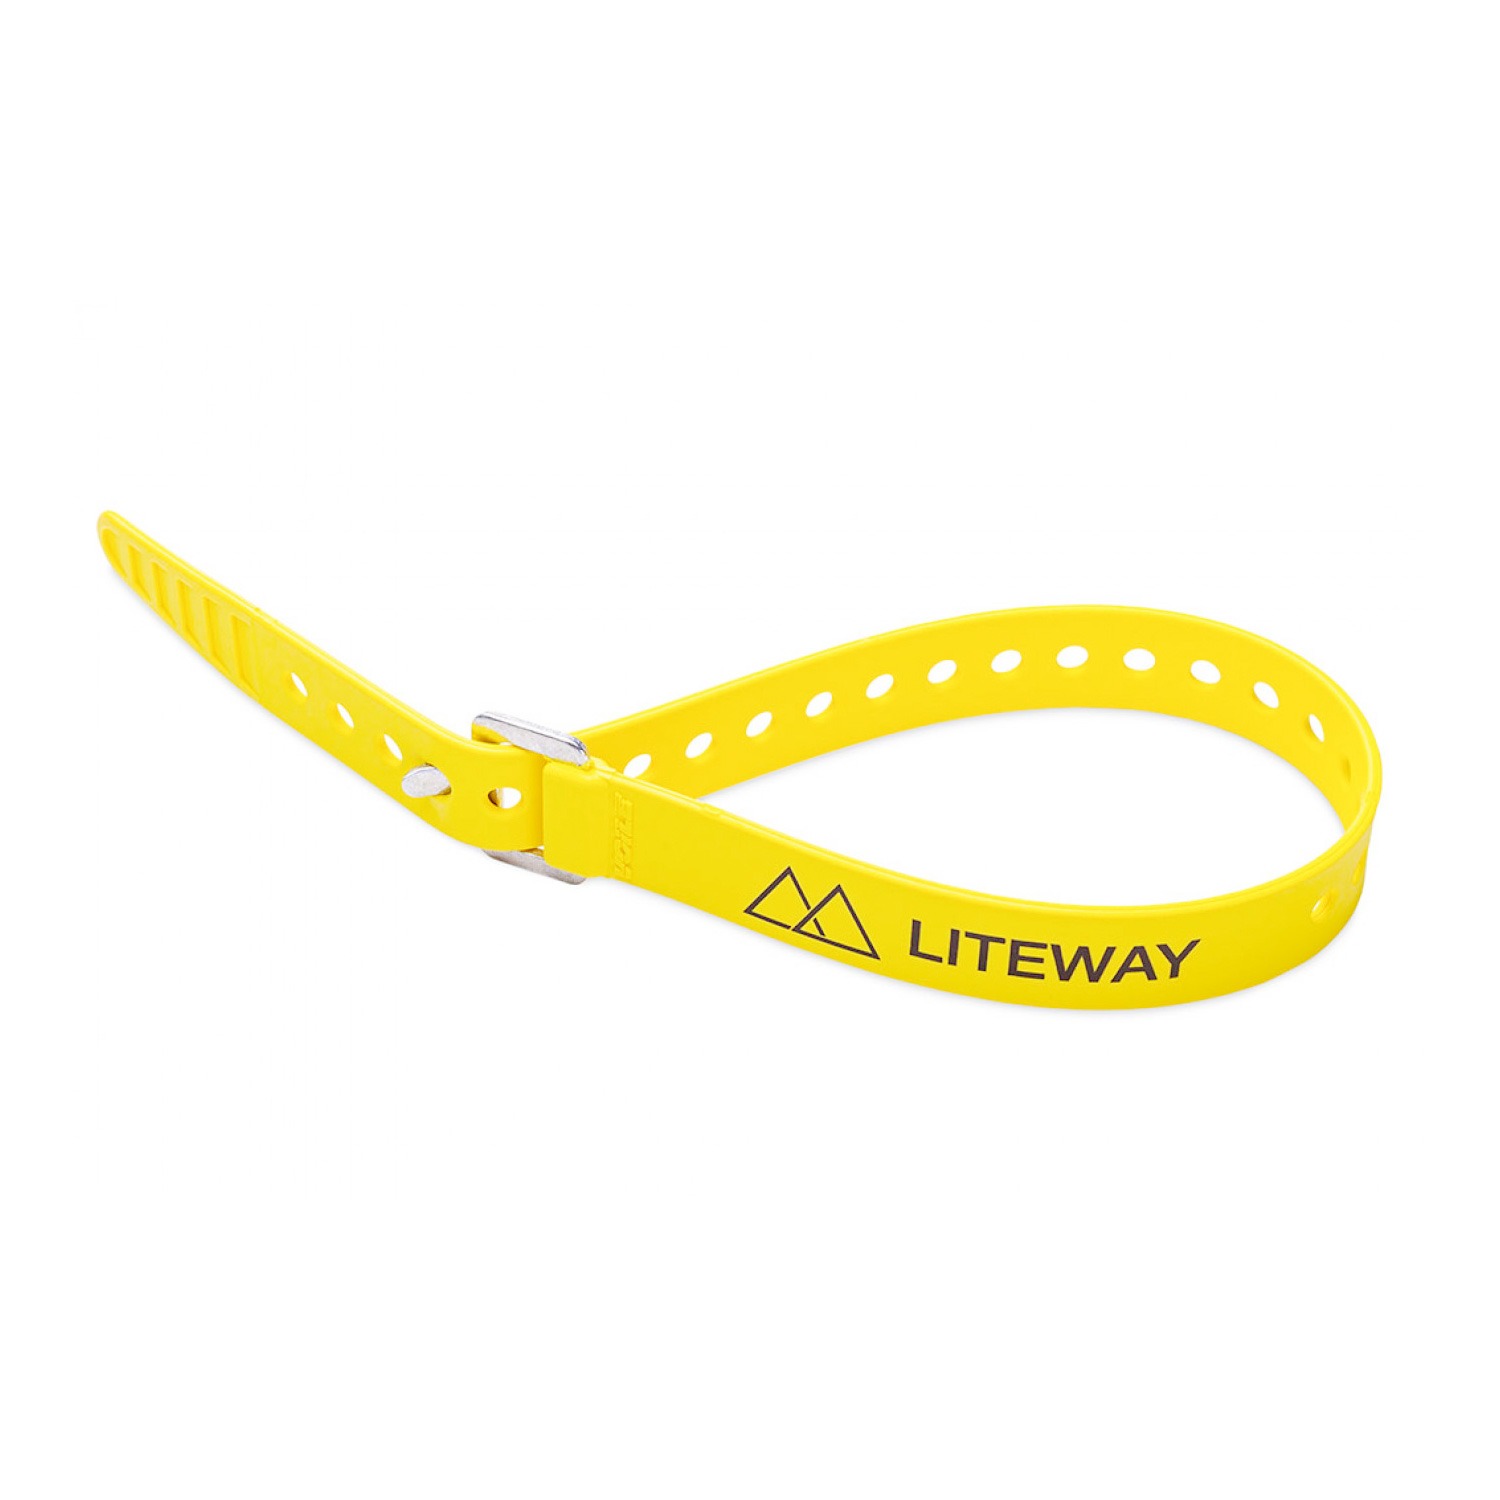 Liteway Pole strap  by Voile Straps® Yellow